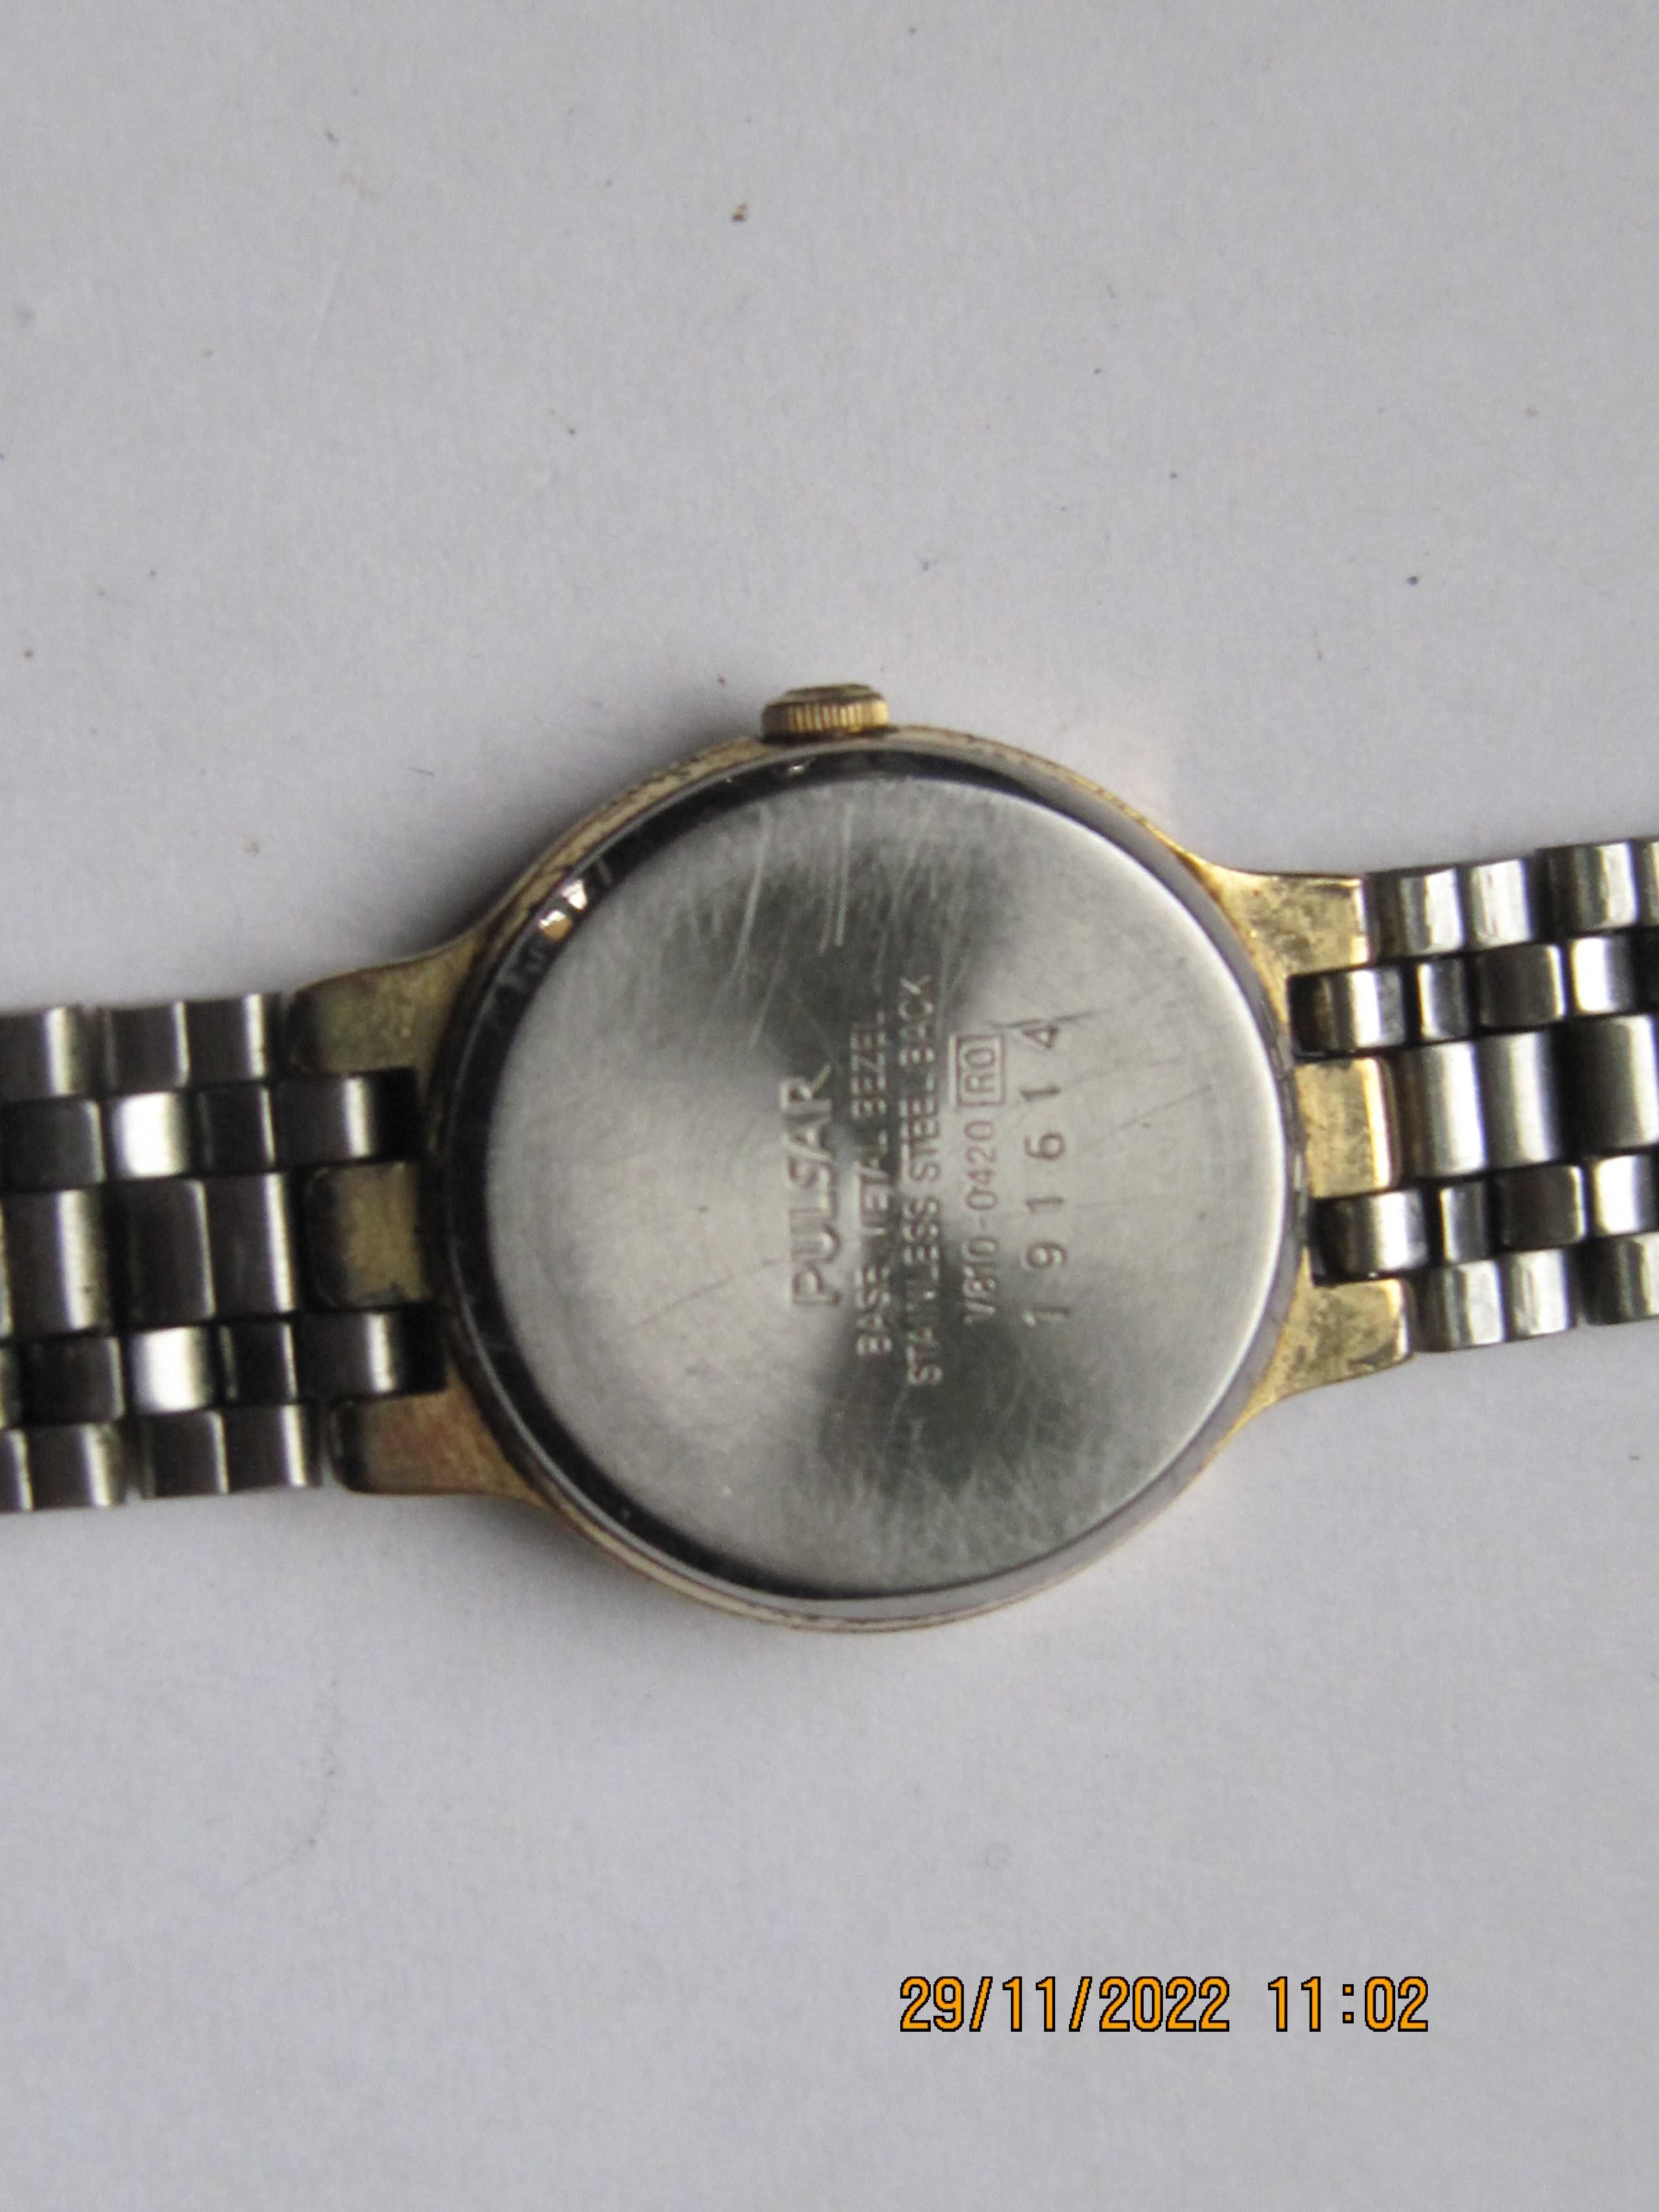 Citizen quartz oryginalny zegarek damski